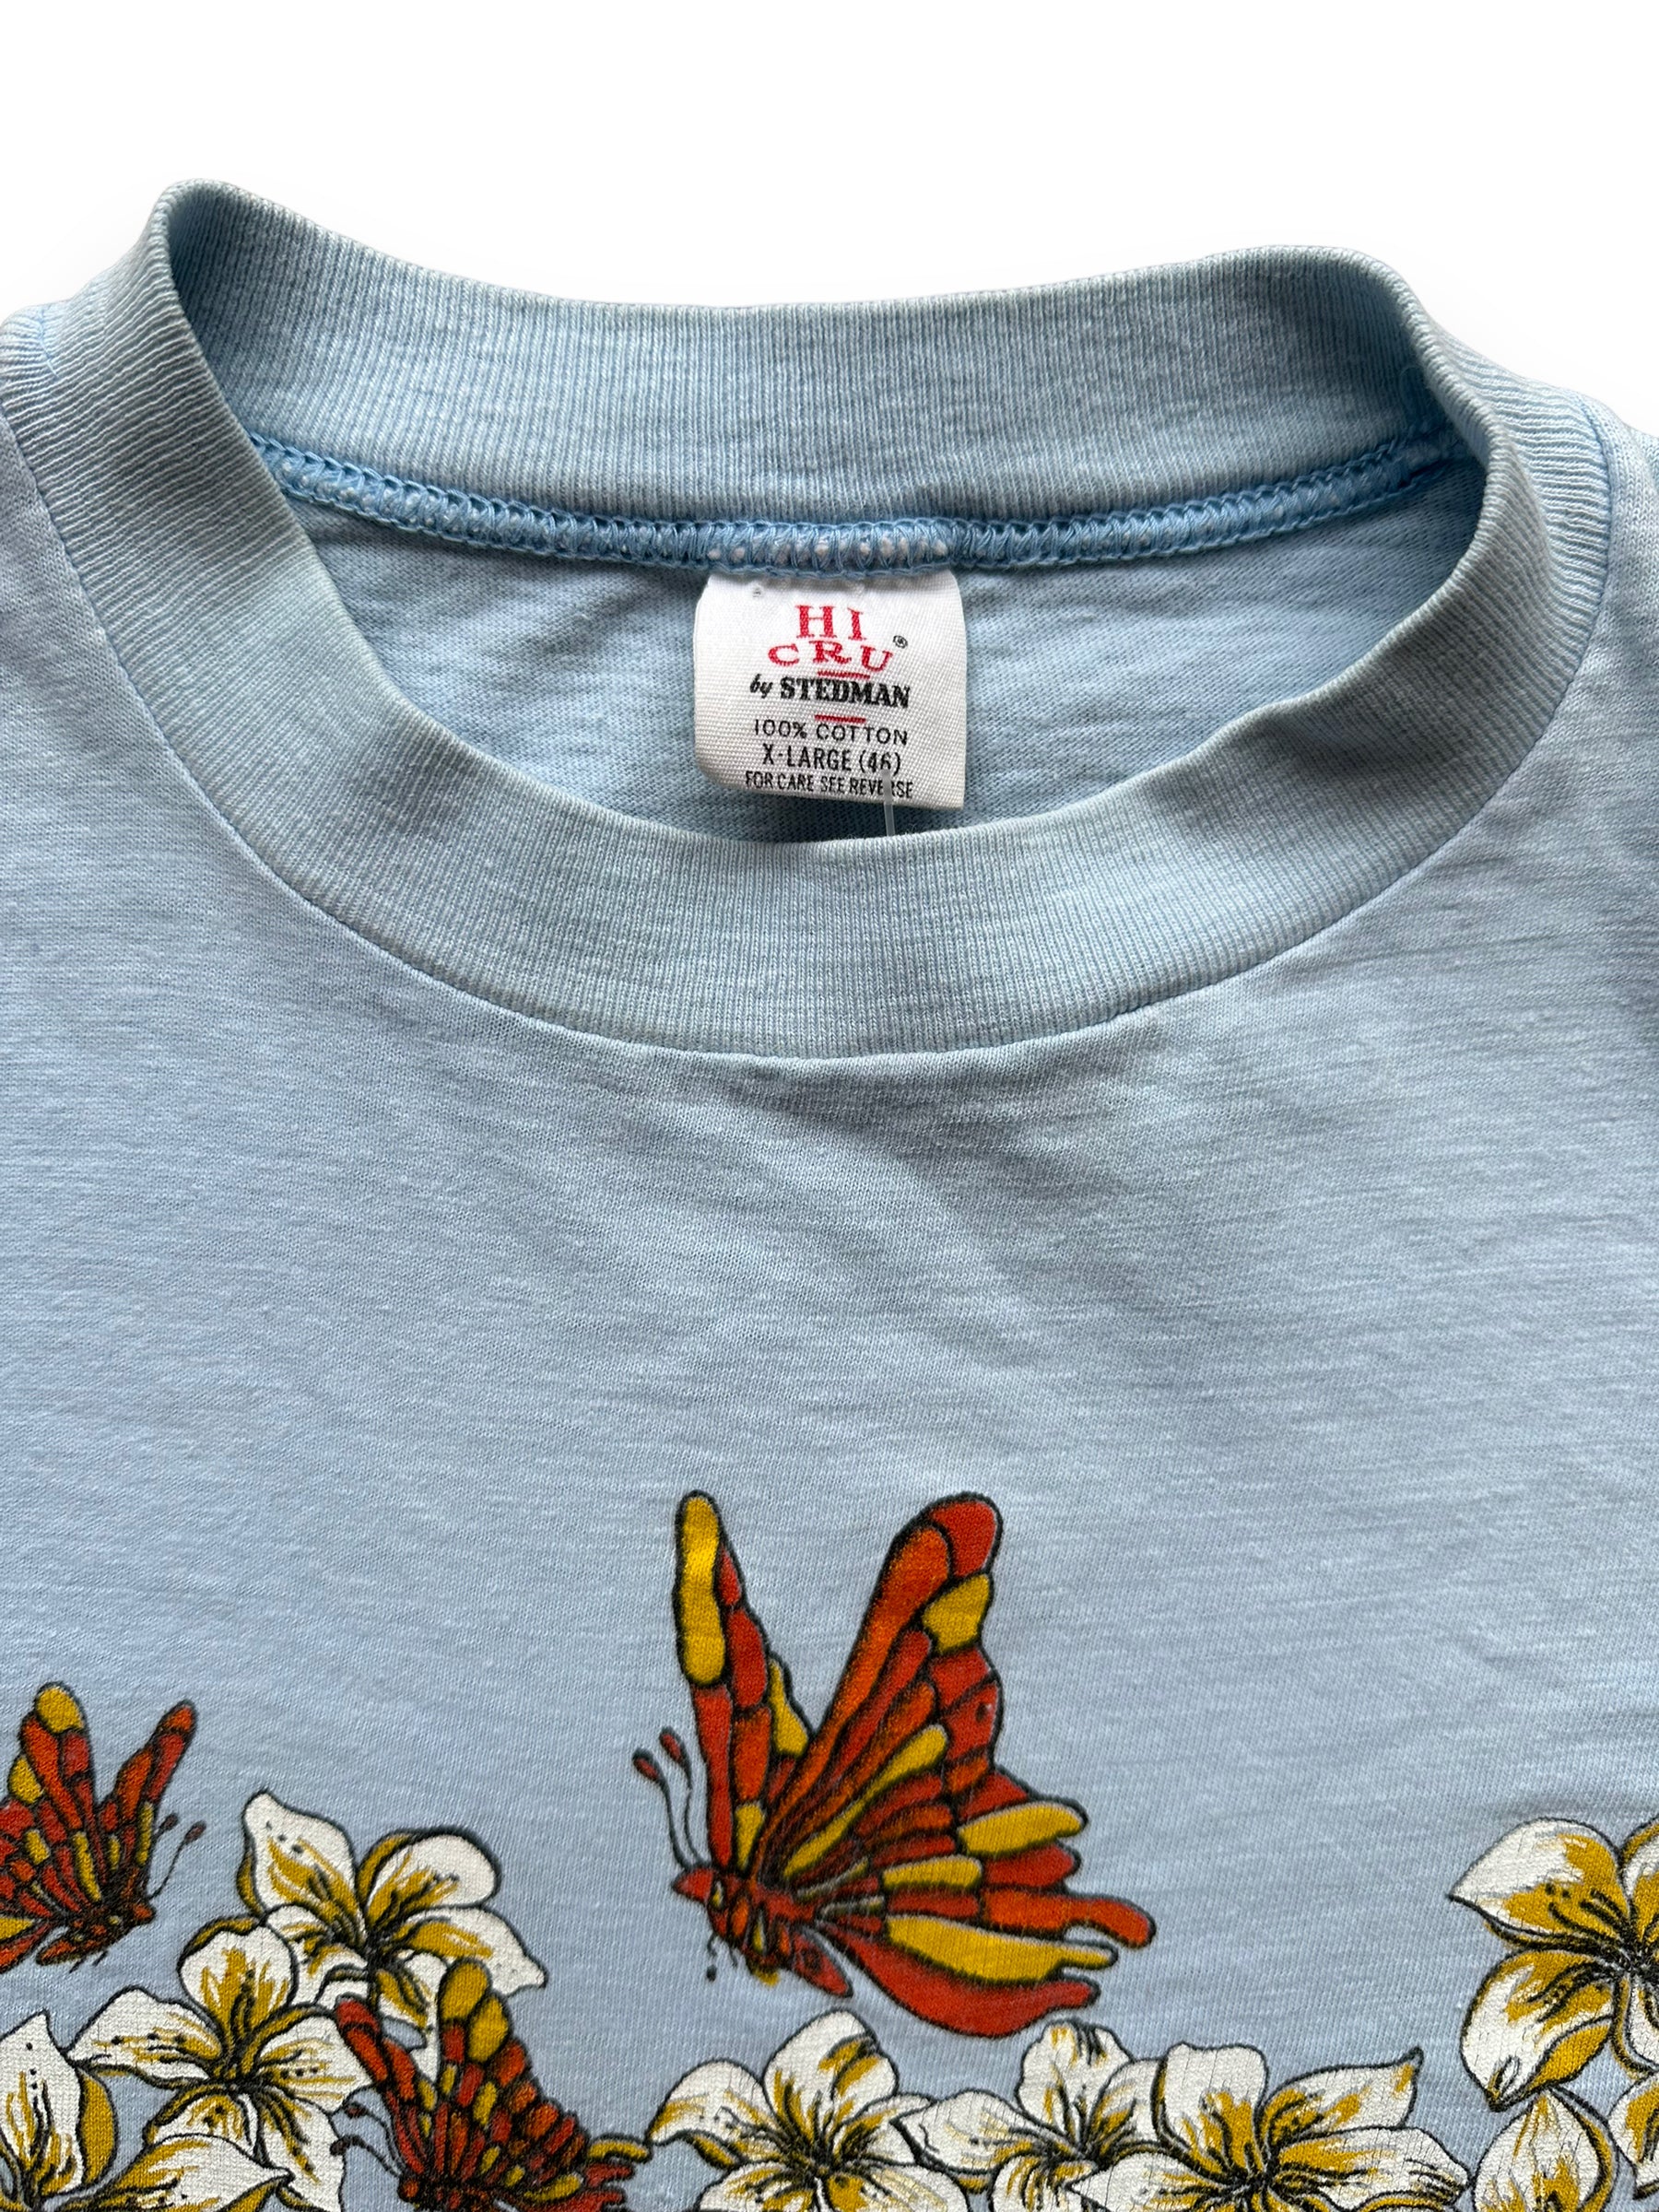 Tag View on Vintage Hawaii Graphic Tee SZ XL | Vintage T-Shirts Seattle | Barn Owl Vintage Tees Seattle